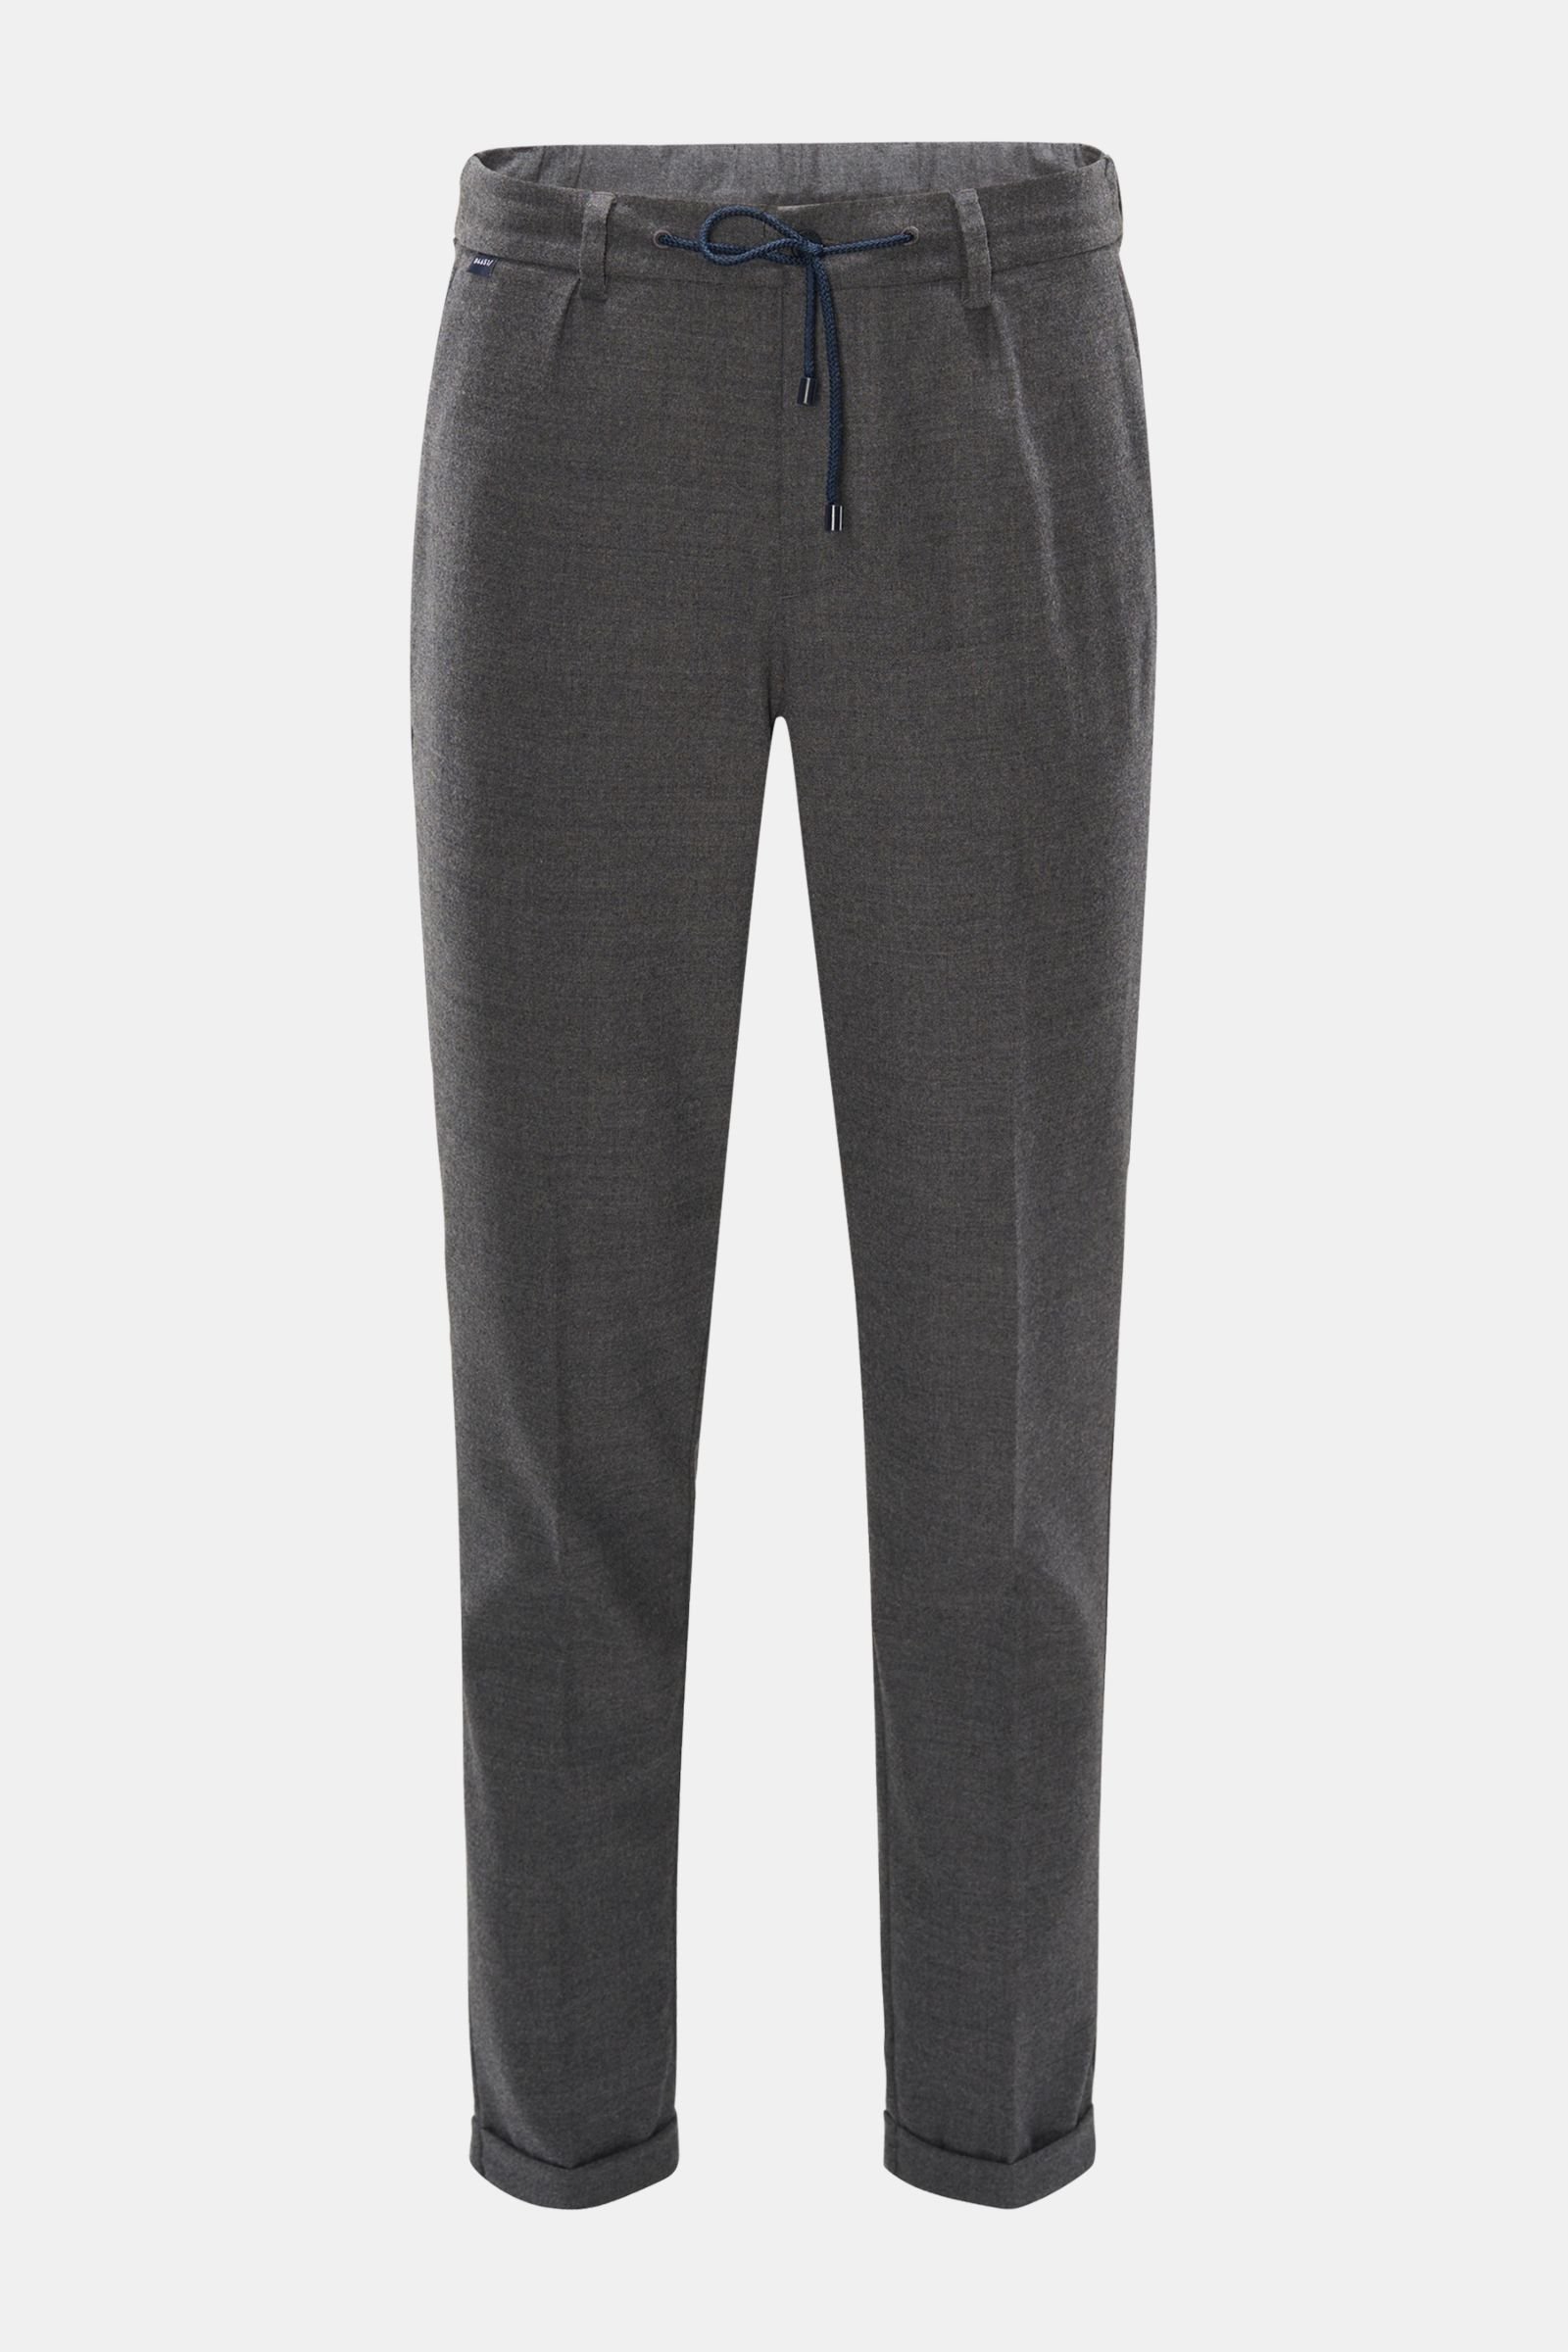 Flannel jogger pants 'Smart Joggpant Flan' dark grey